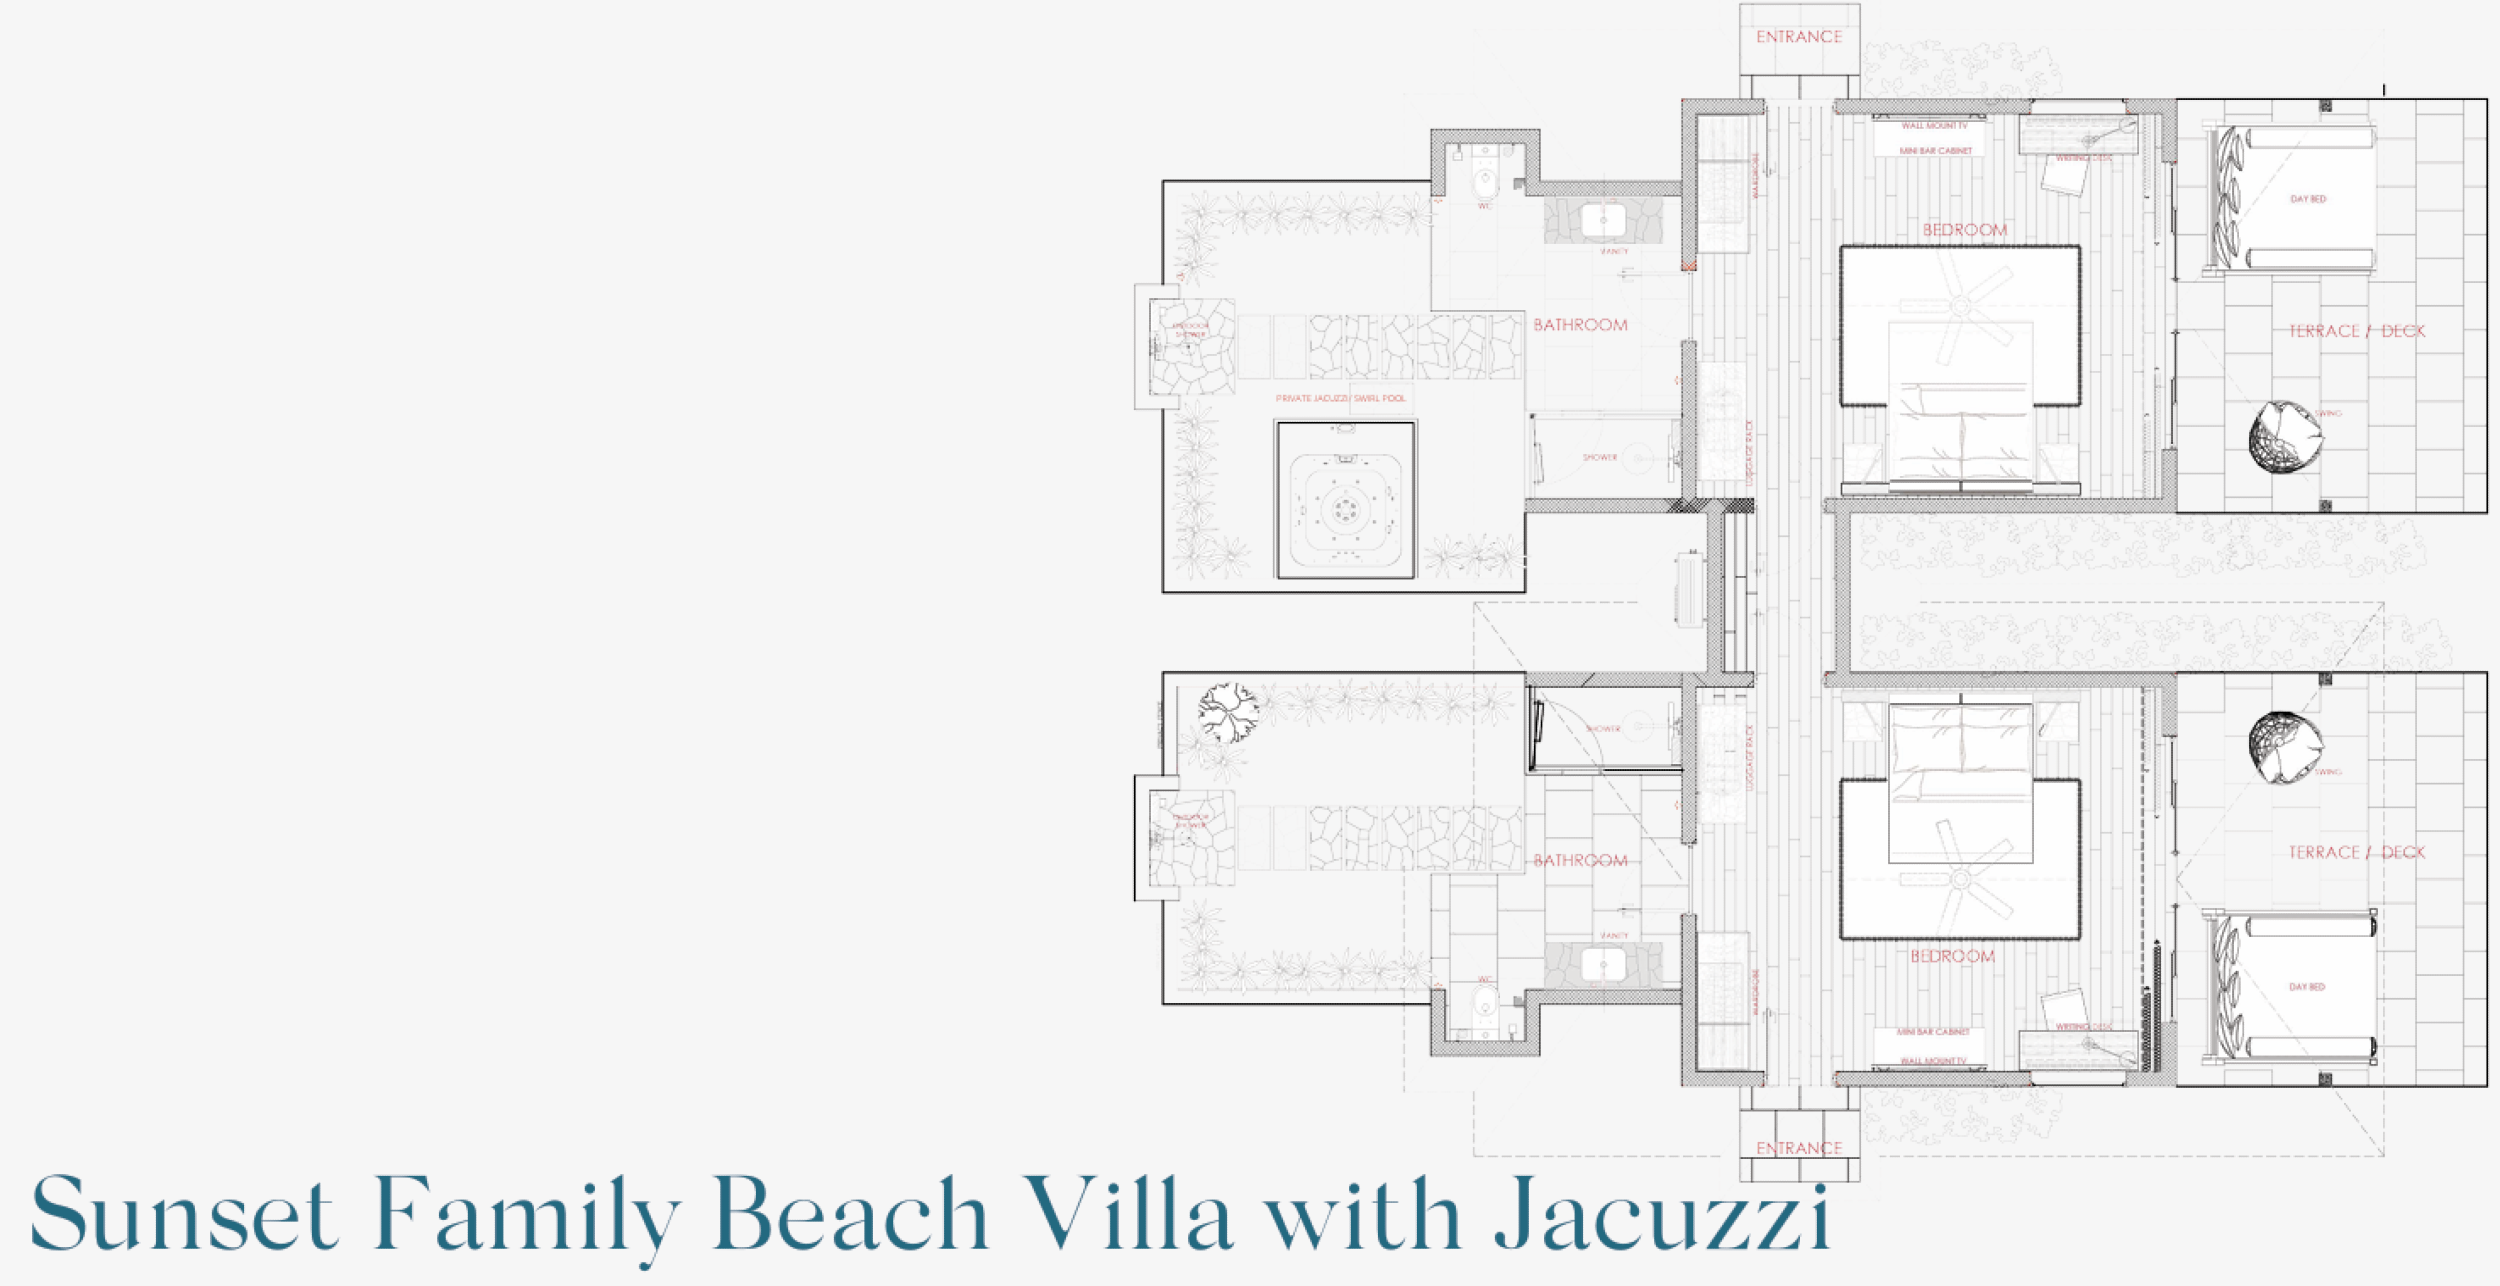 Sunset Family Beach Villa with Jacuzzi - Floor plan - Nova Maldives